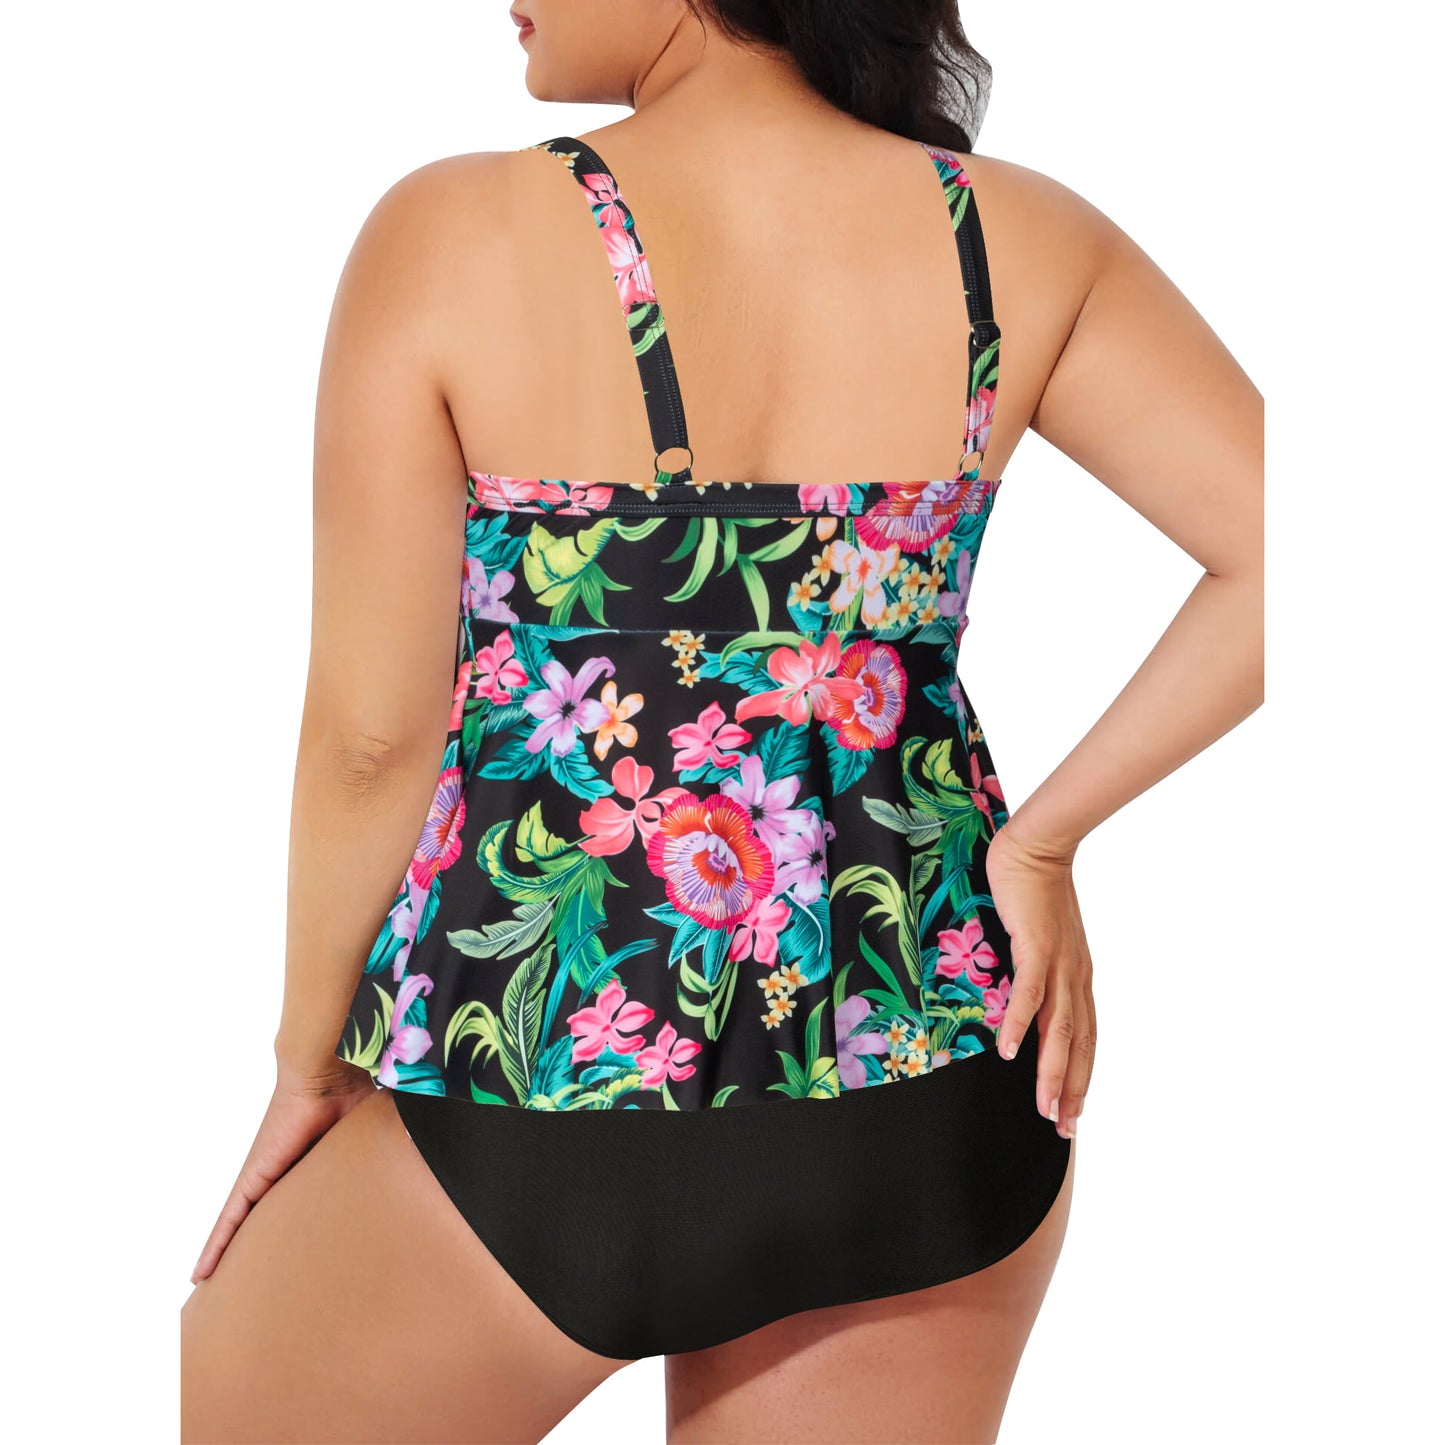 Chama Plus Size Swimwear 2-Piece Swimsuit Set for Women Florence Ruffle Tankini Bathing Suits